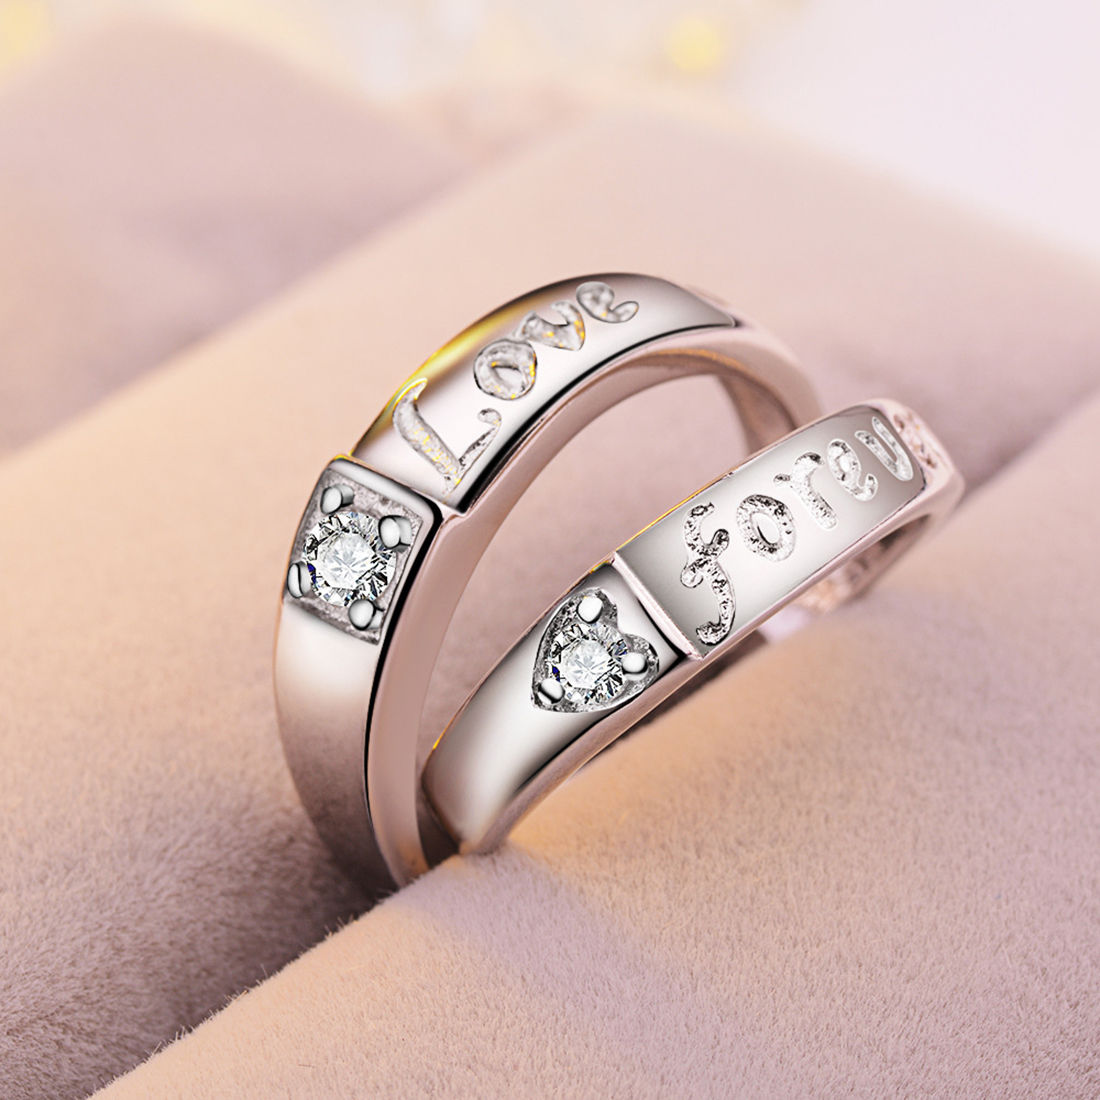 Explore Our diamond promise rings at Fascinating Diamonds